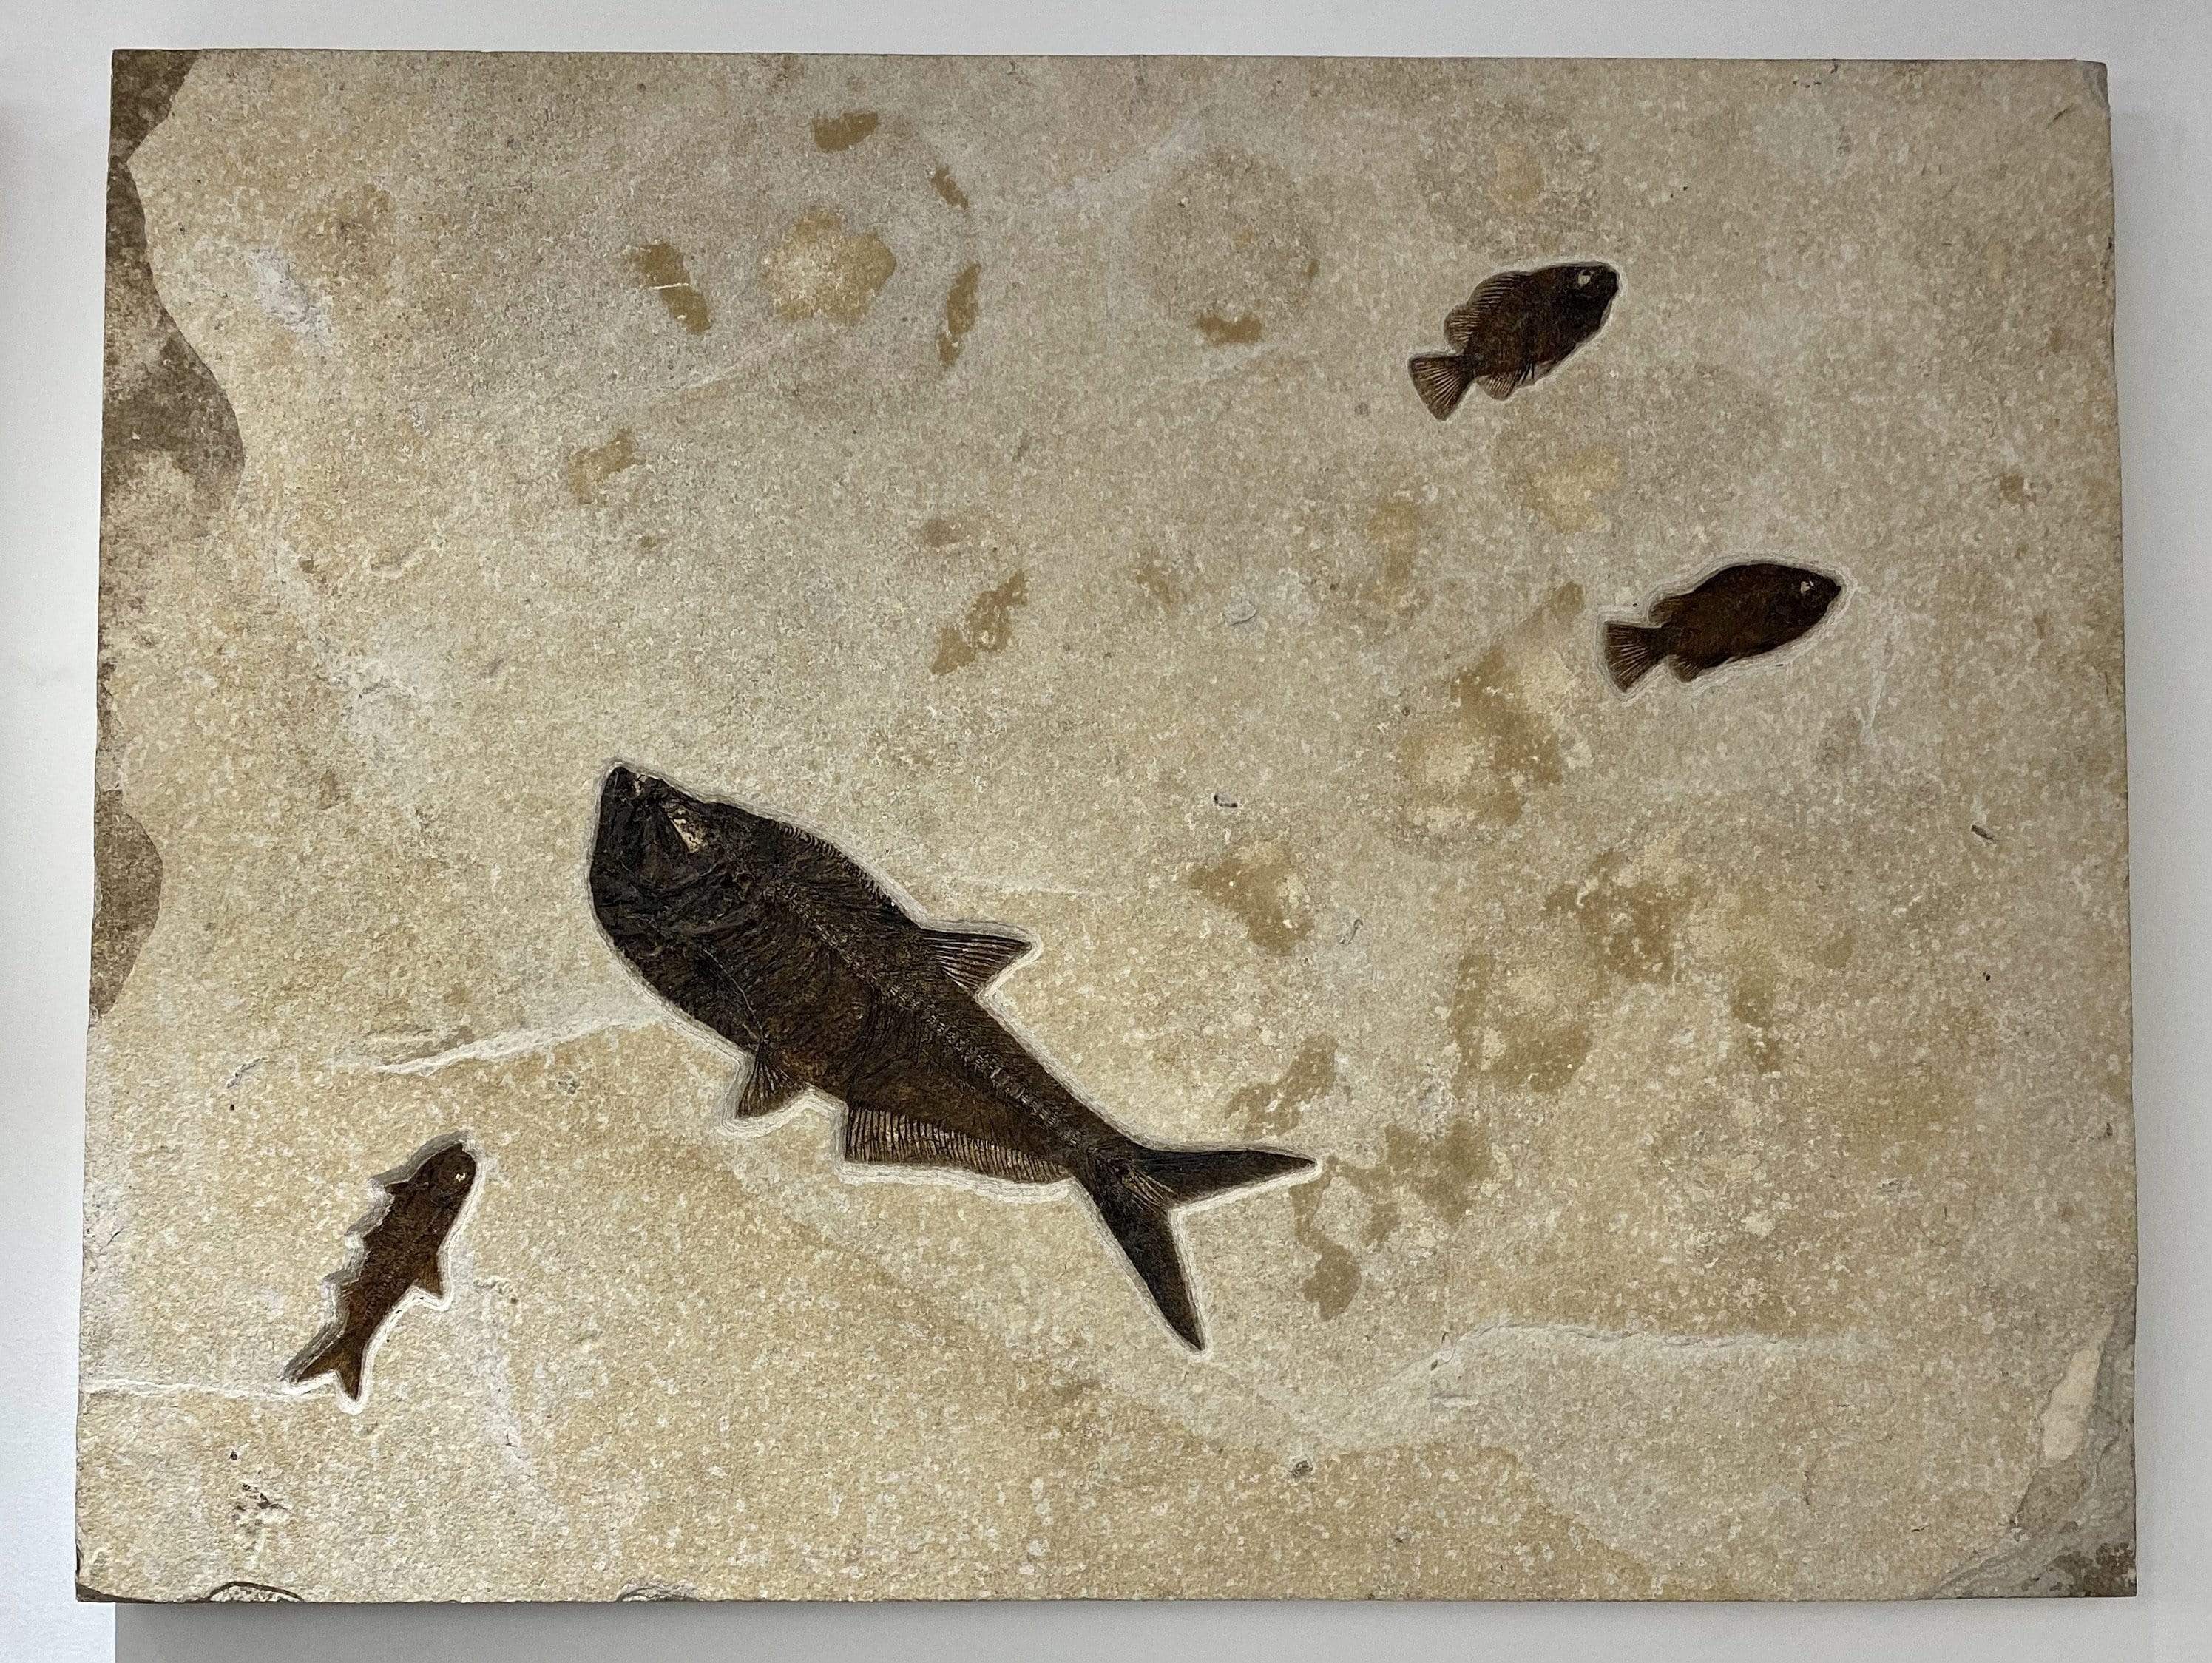 Kalifano Fish Fossils FF12000.010 - Orange Rust Fish Fossil - Wyoming125 lbs, 38" x 29" FF12000.010